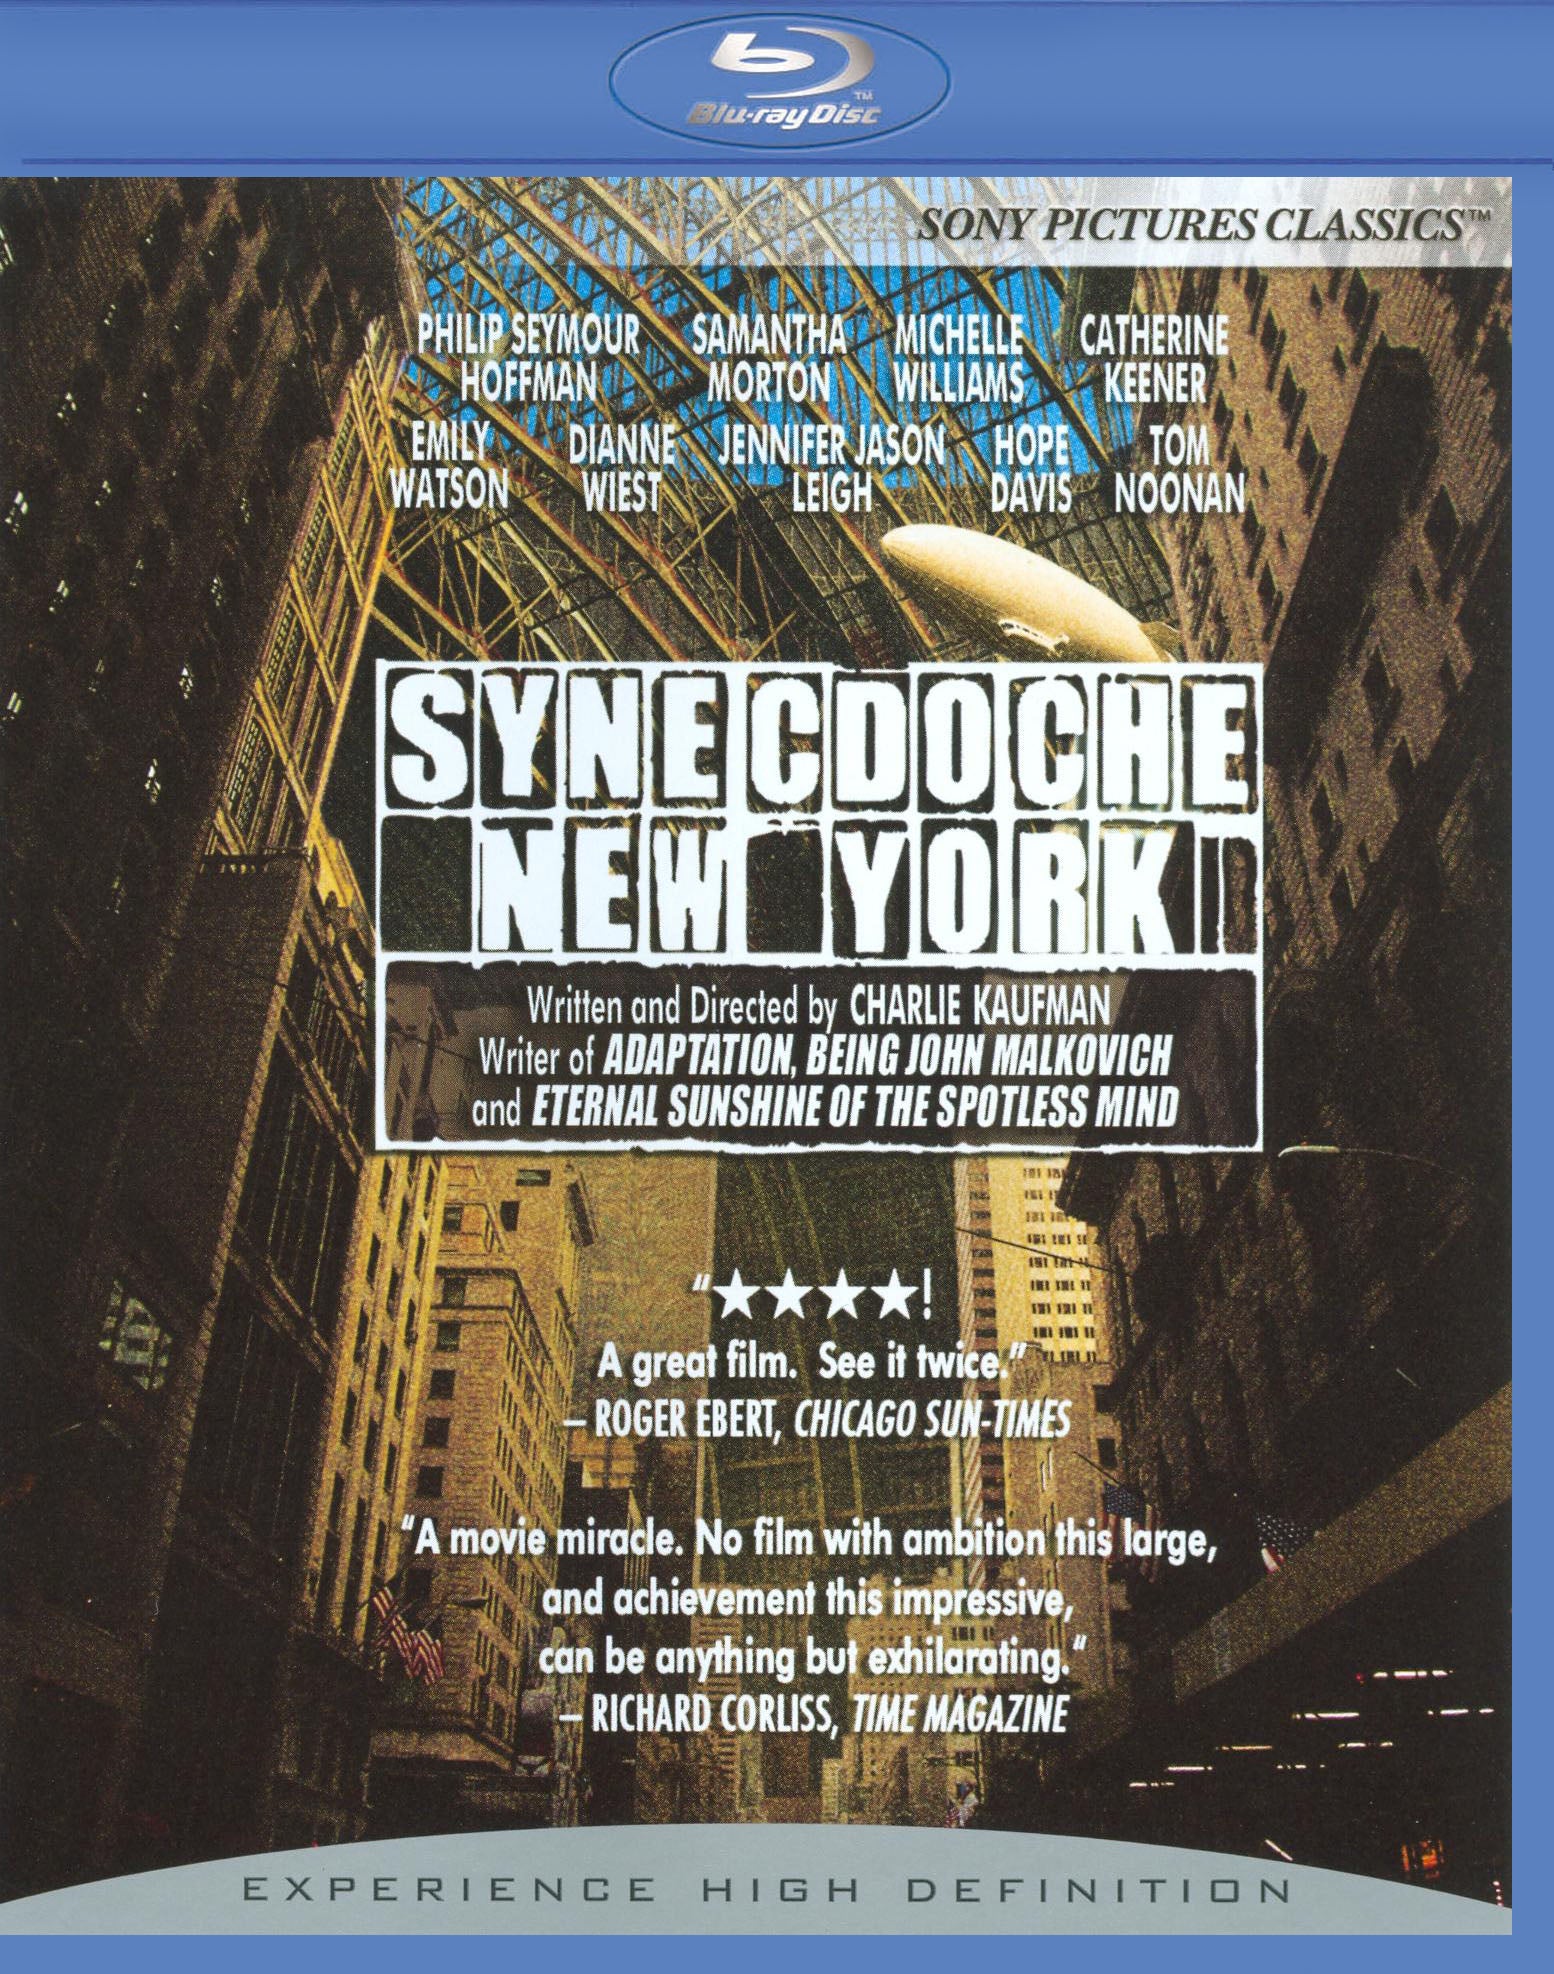 Synecdoche, New York [Blu-ray] cover art